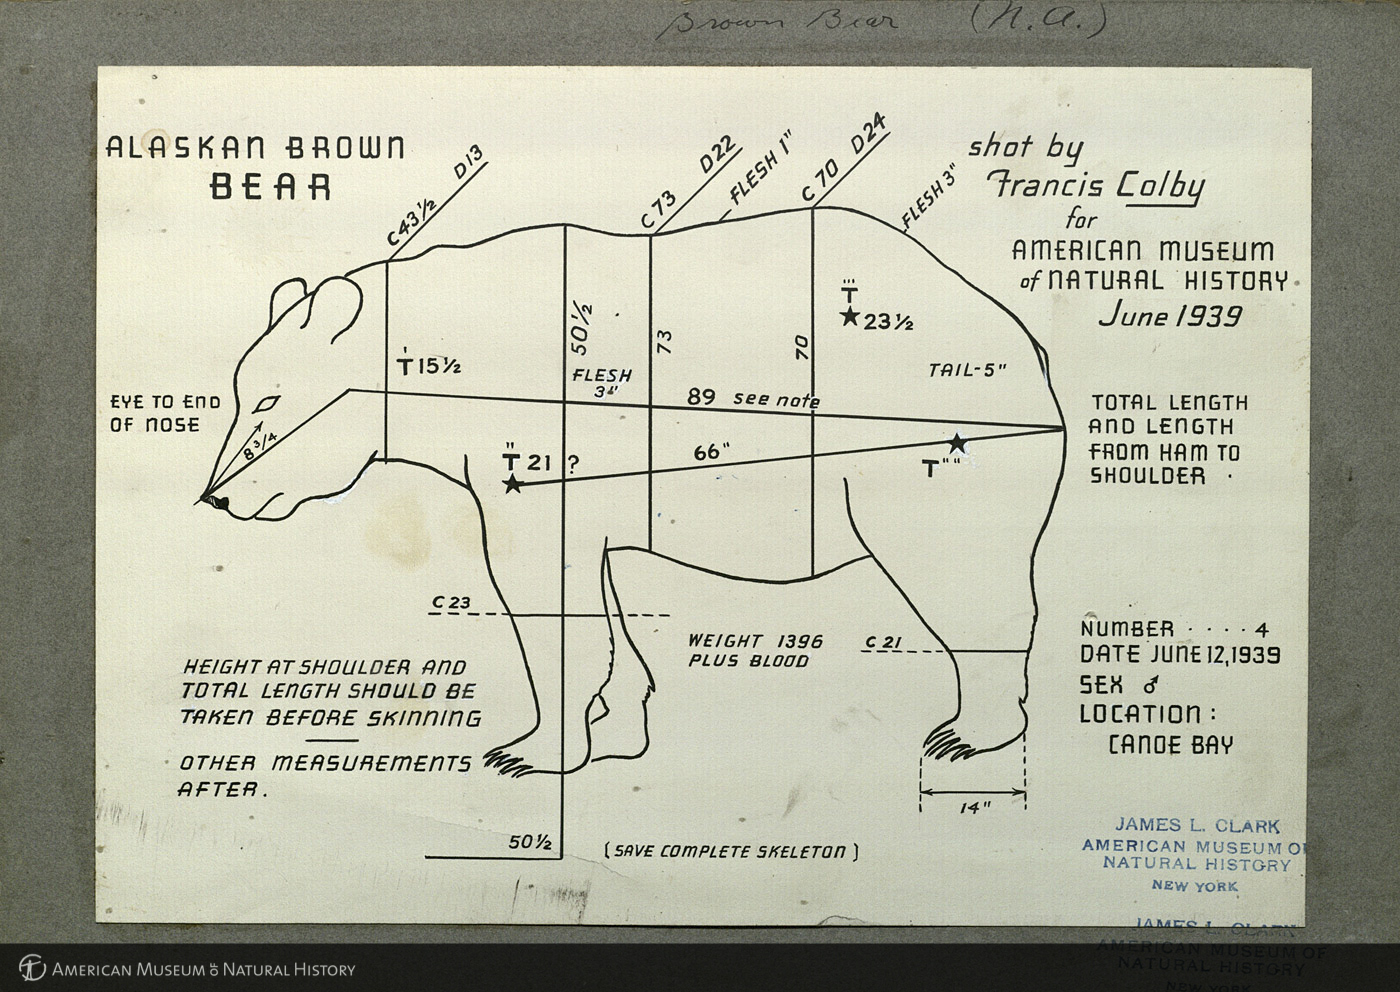 Alaska brown bear specimen measurement chart from AMNH